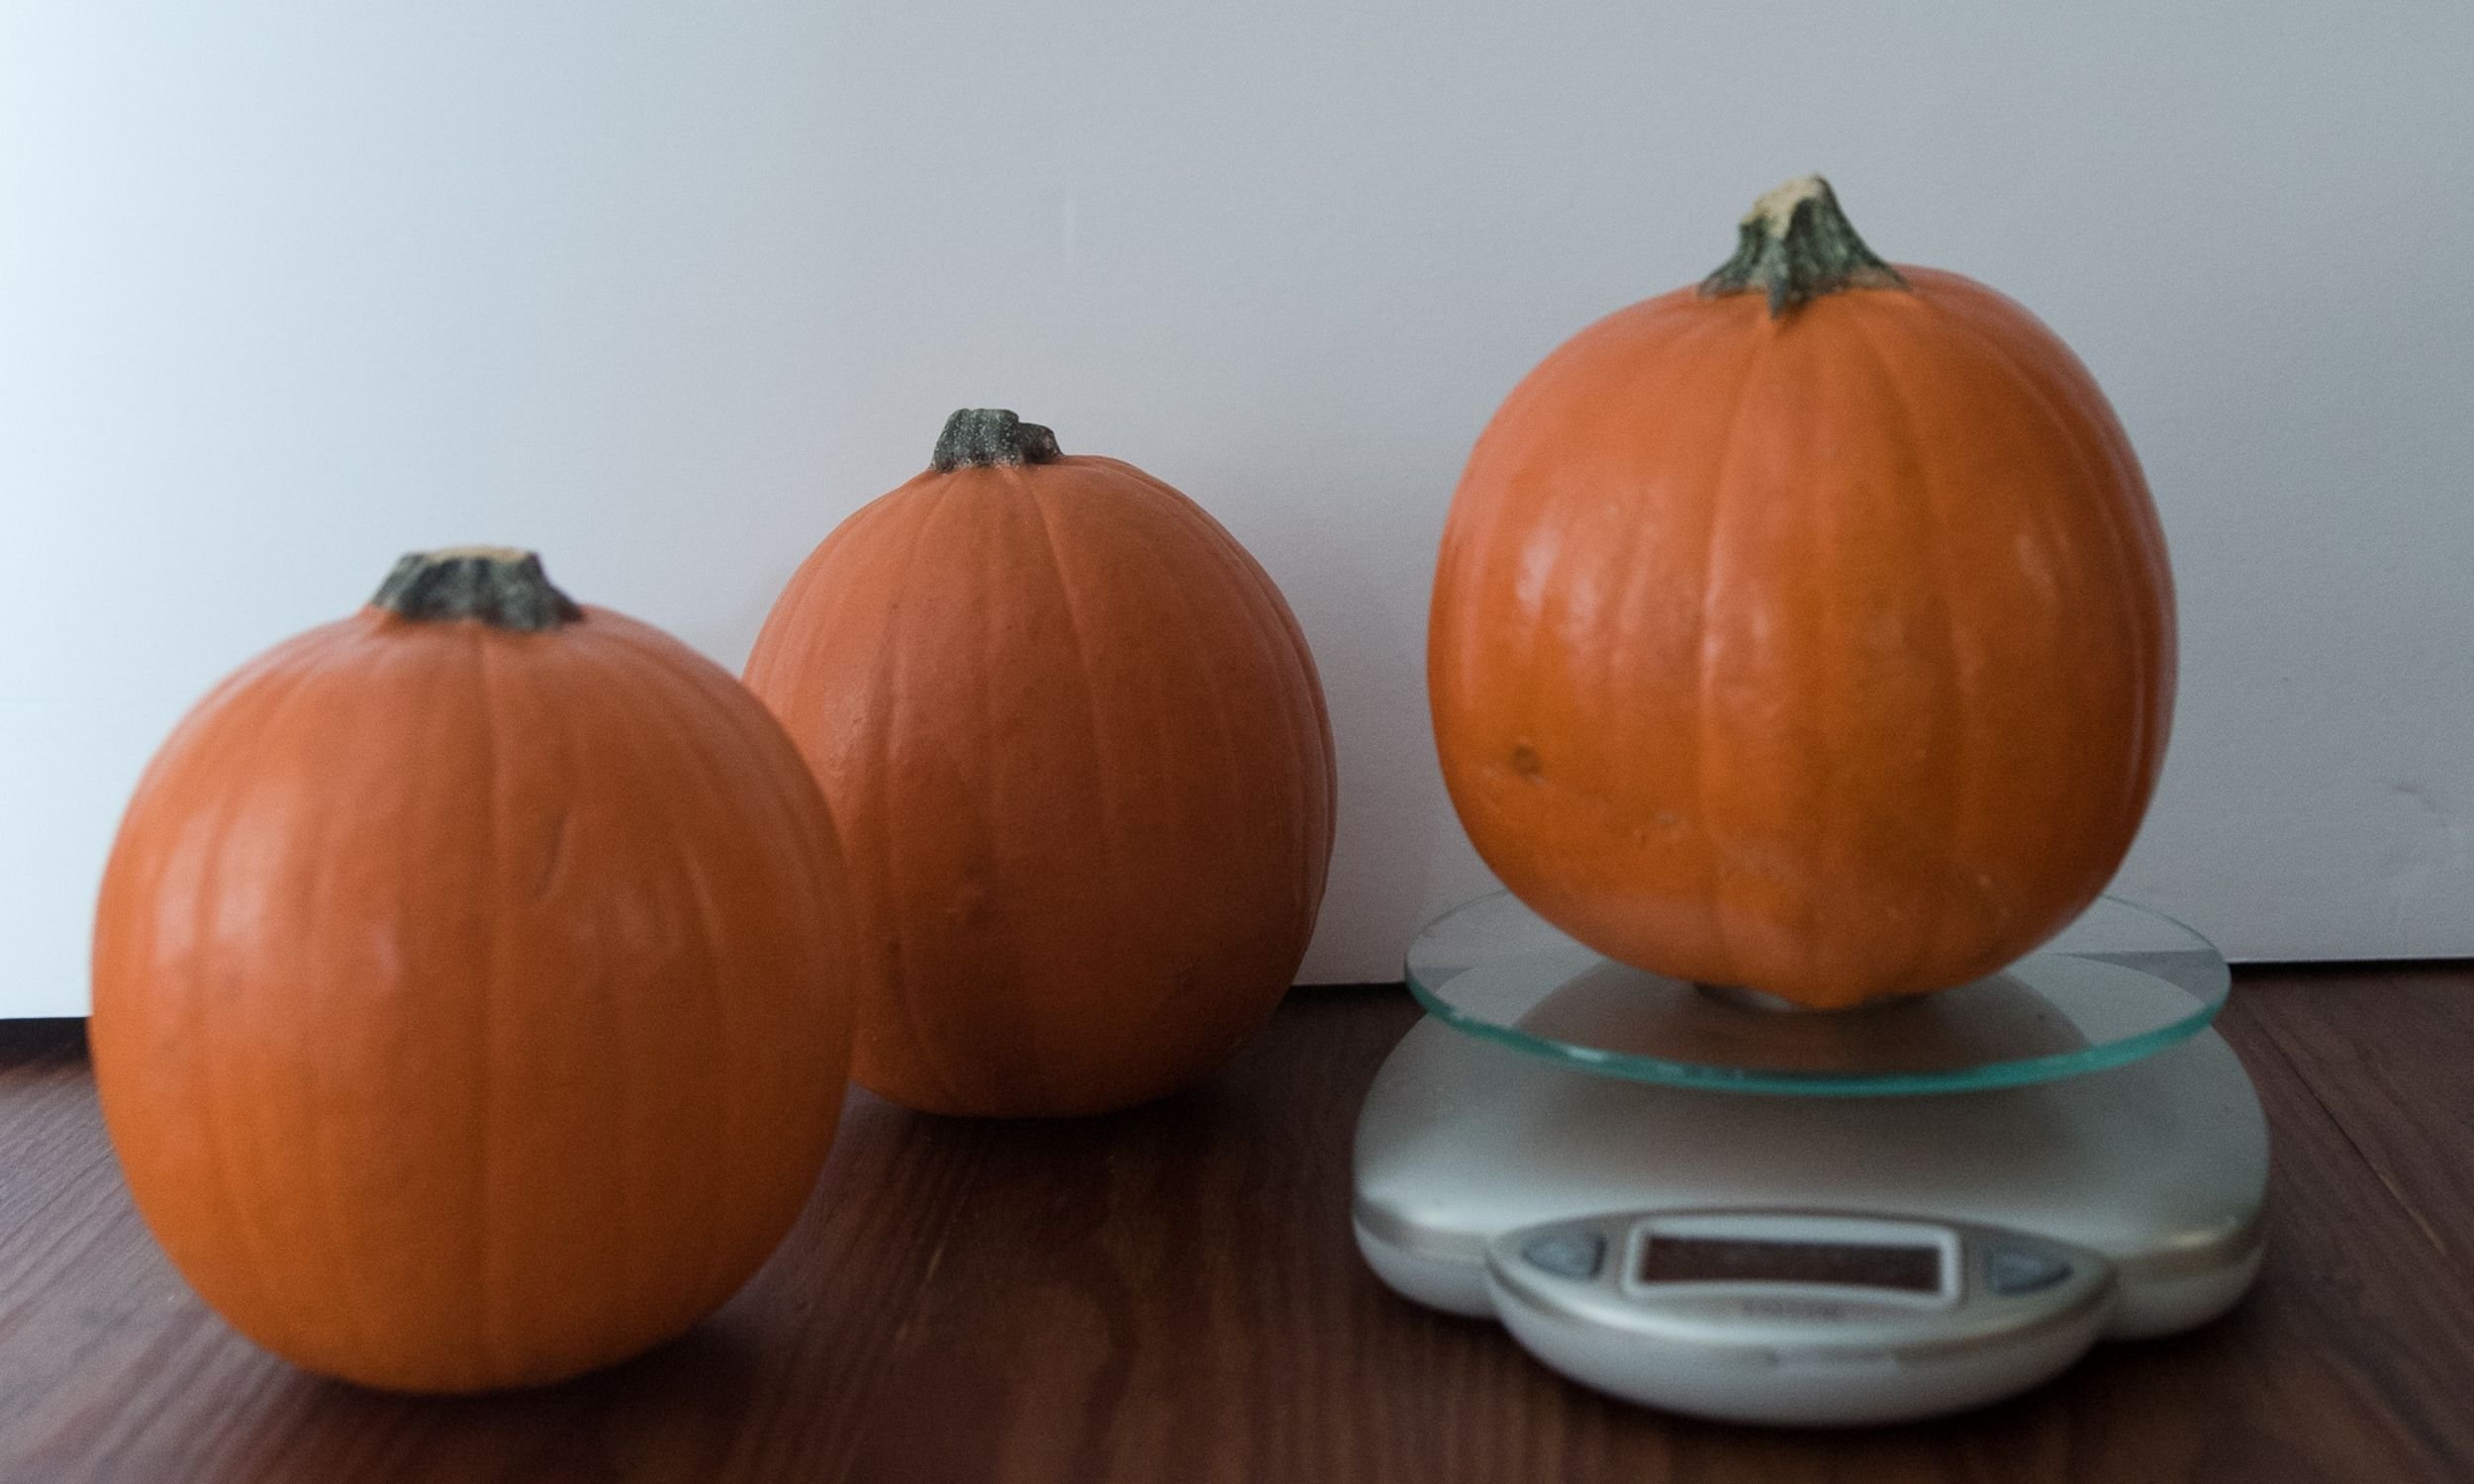 pie pumpkins on a scale